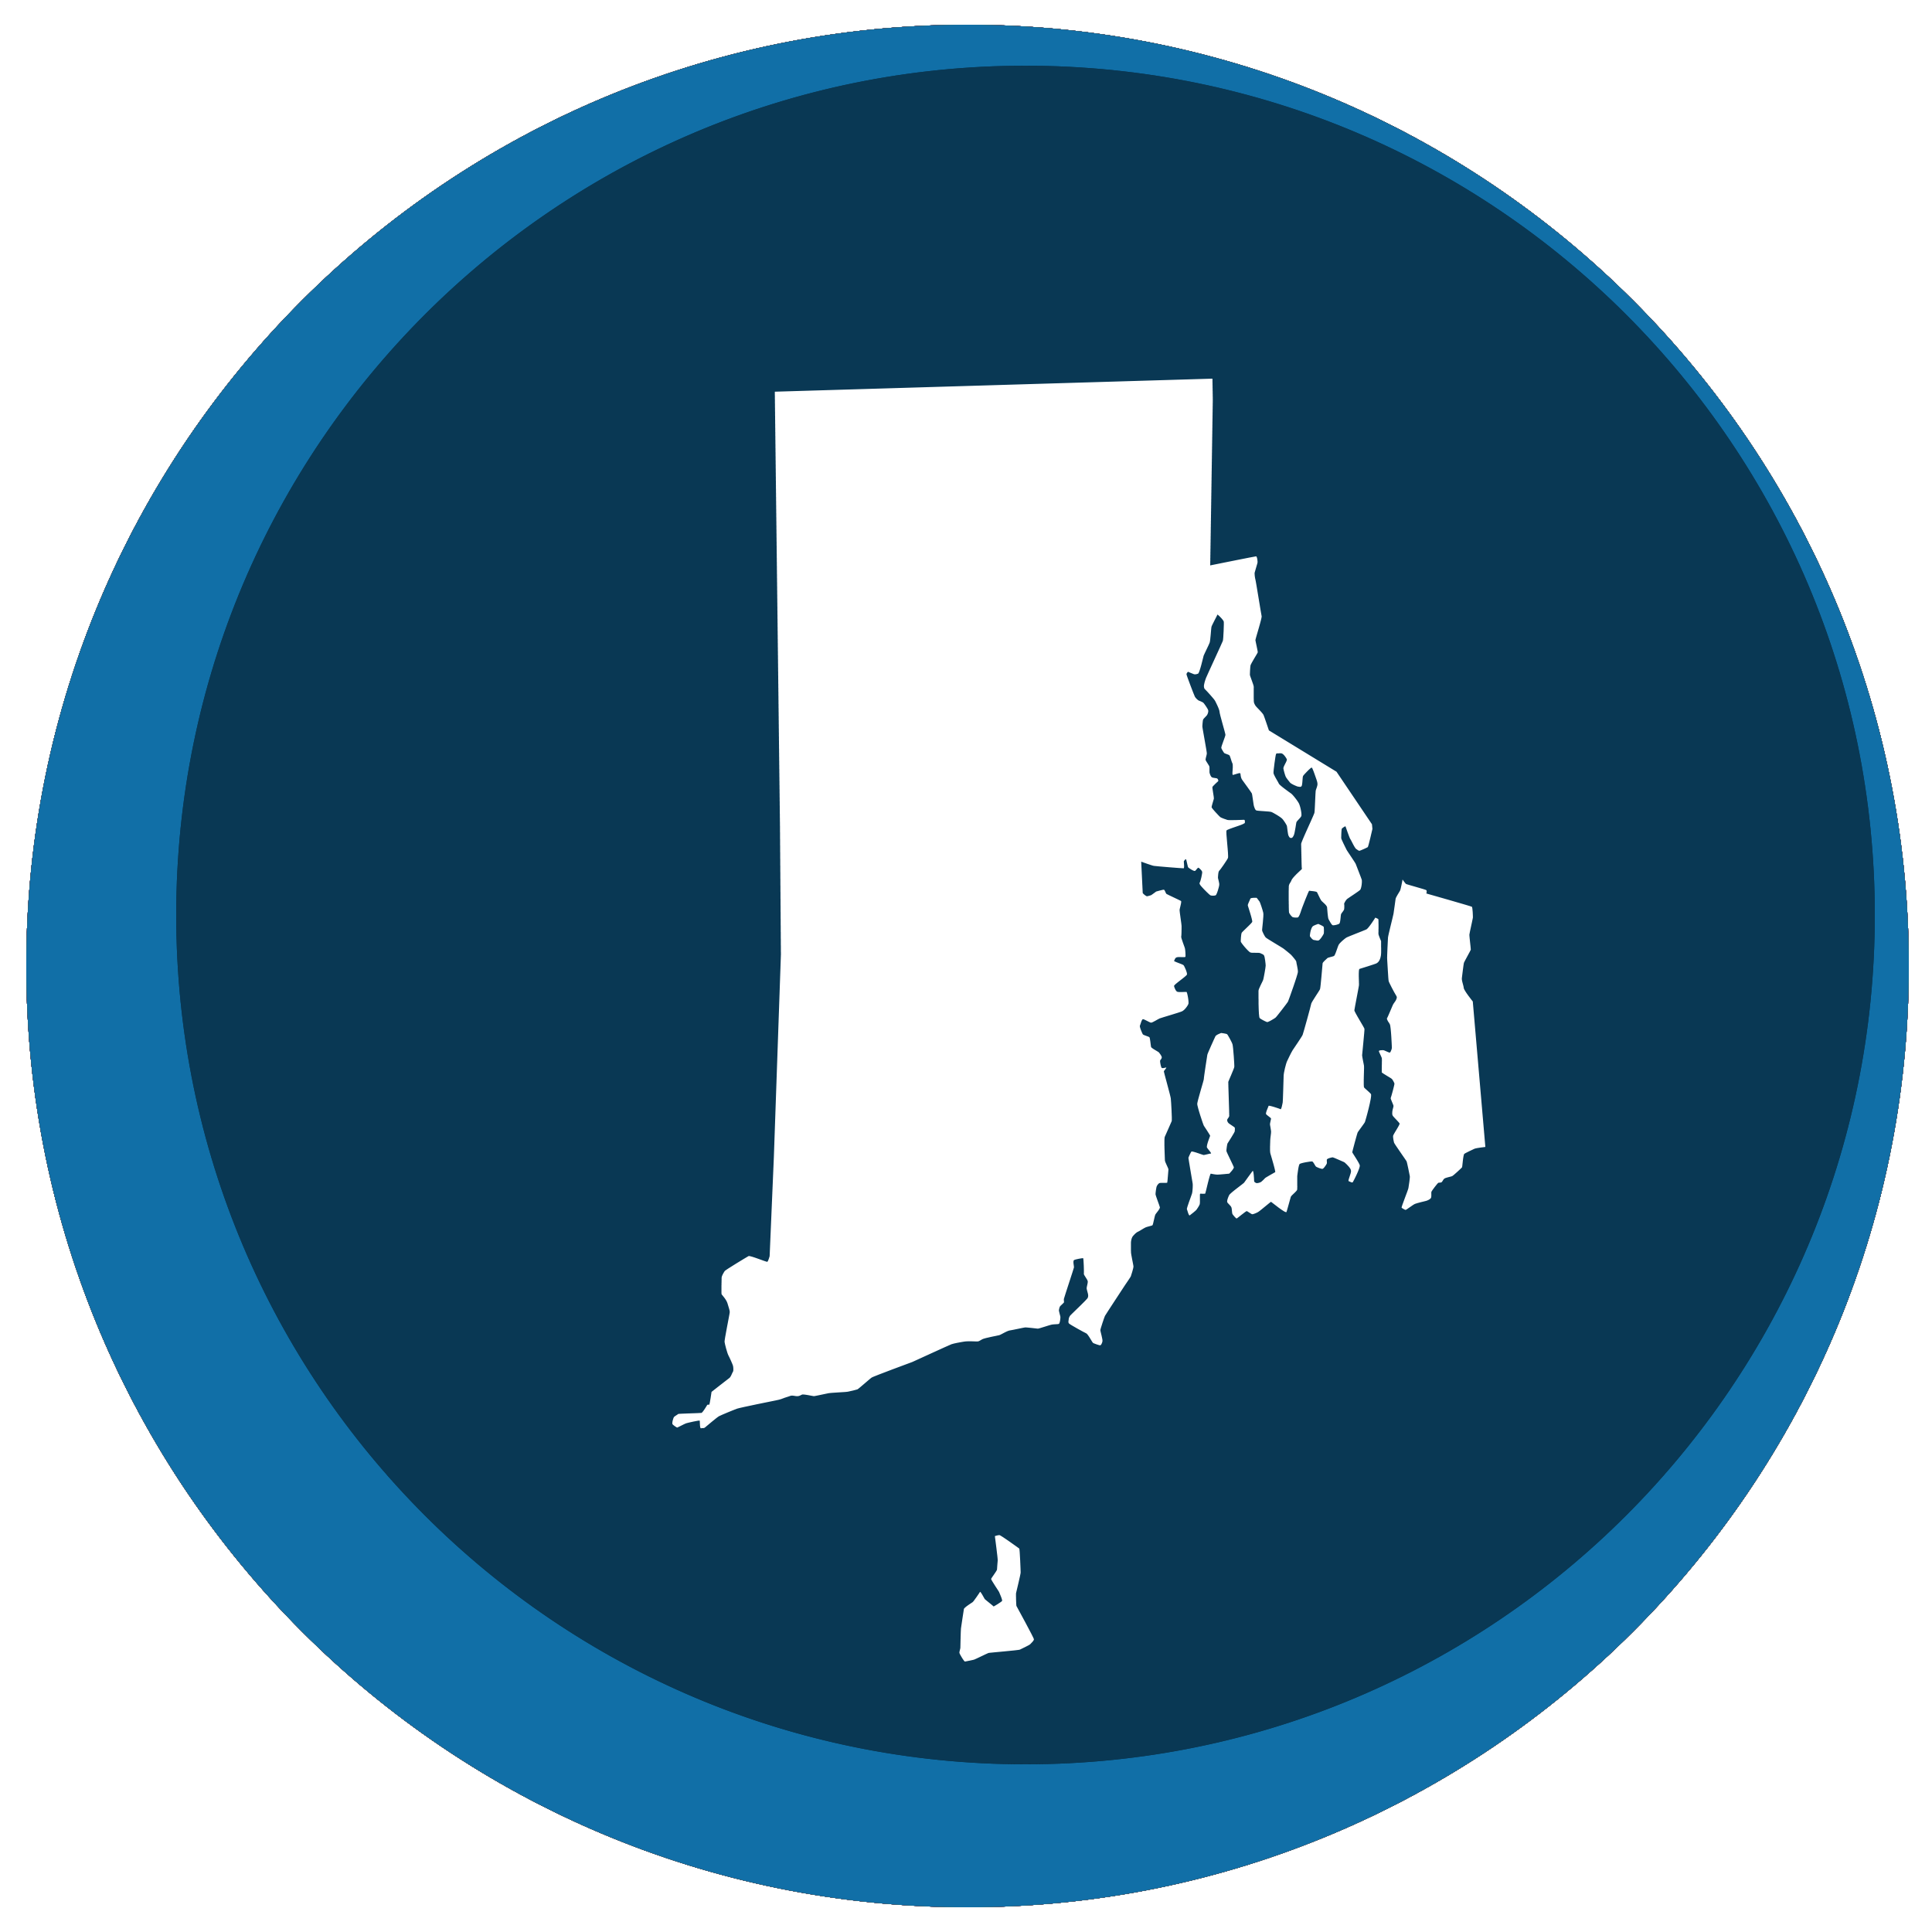 Rhode Island state shape in a circle